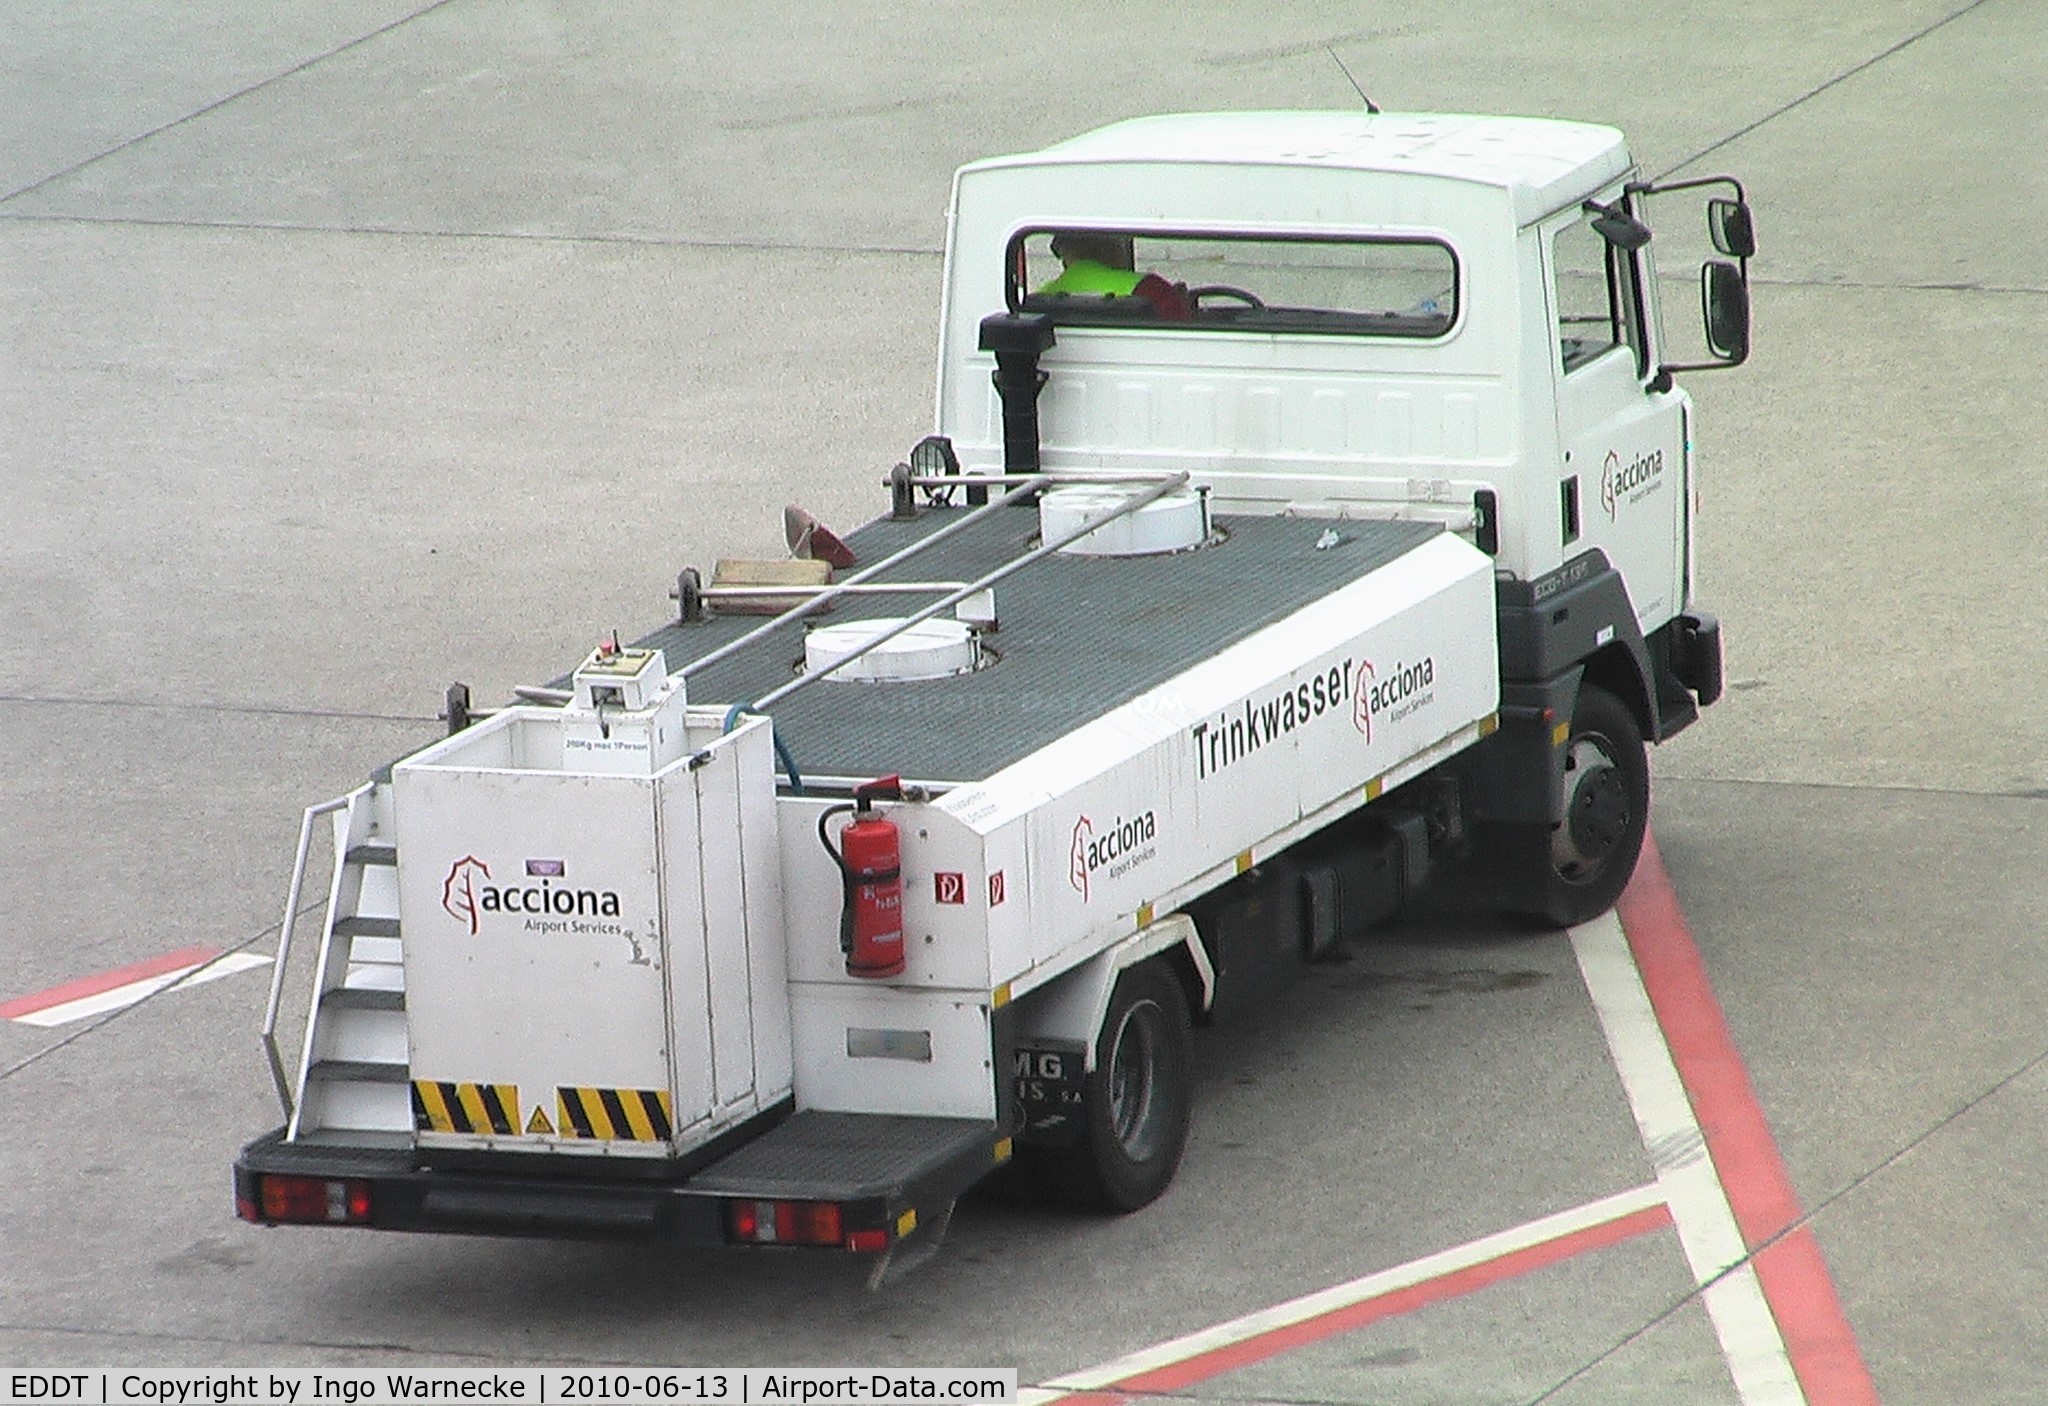 Tegel International Airport (closing in 2011), Berlin Germany (EDDT) - potable water truck at Tegel airport